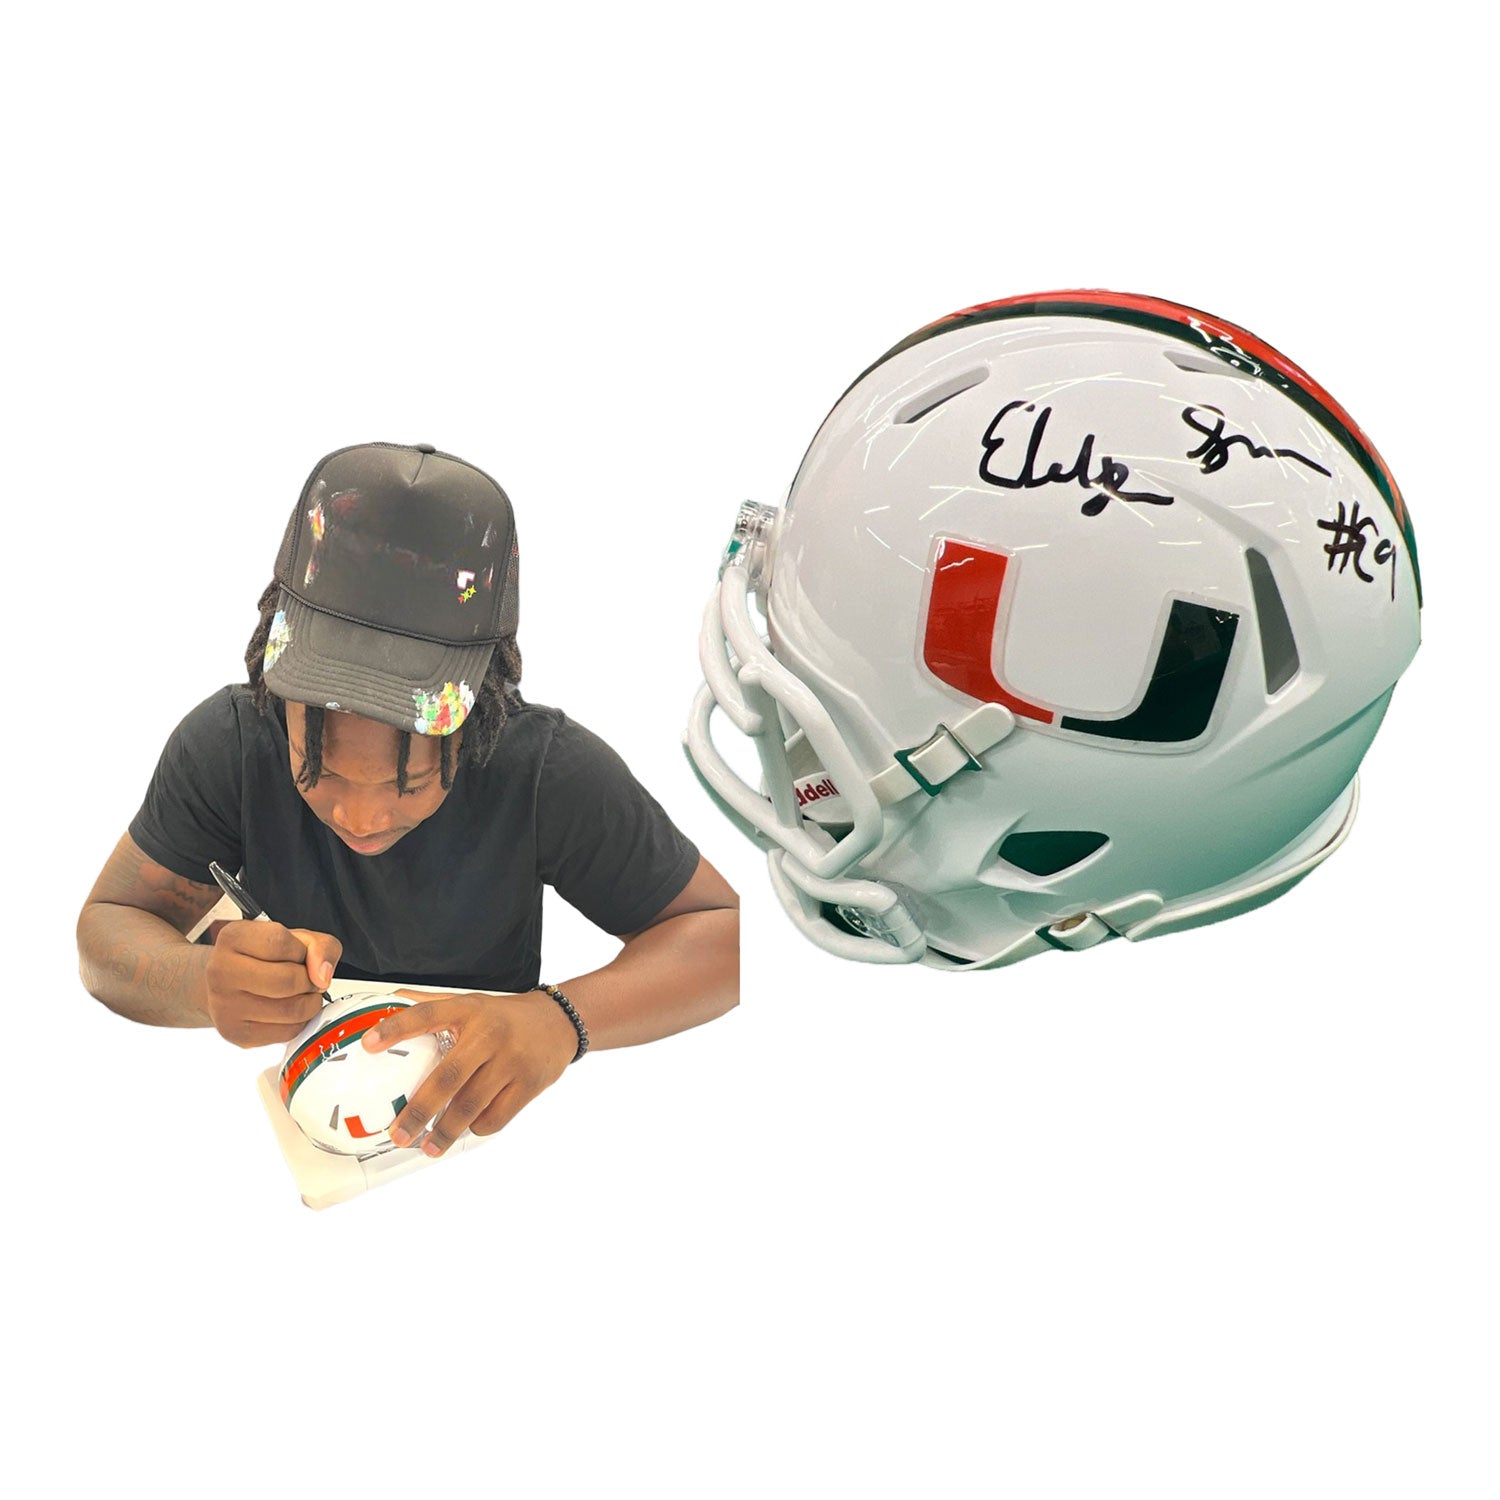 Miami Hurricanes Student Athlete #9 Elija Lofton Mini Football Helmet - Main View